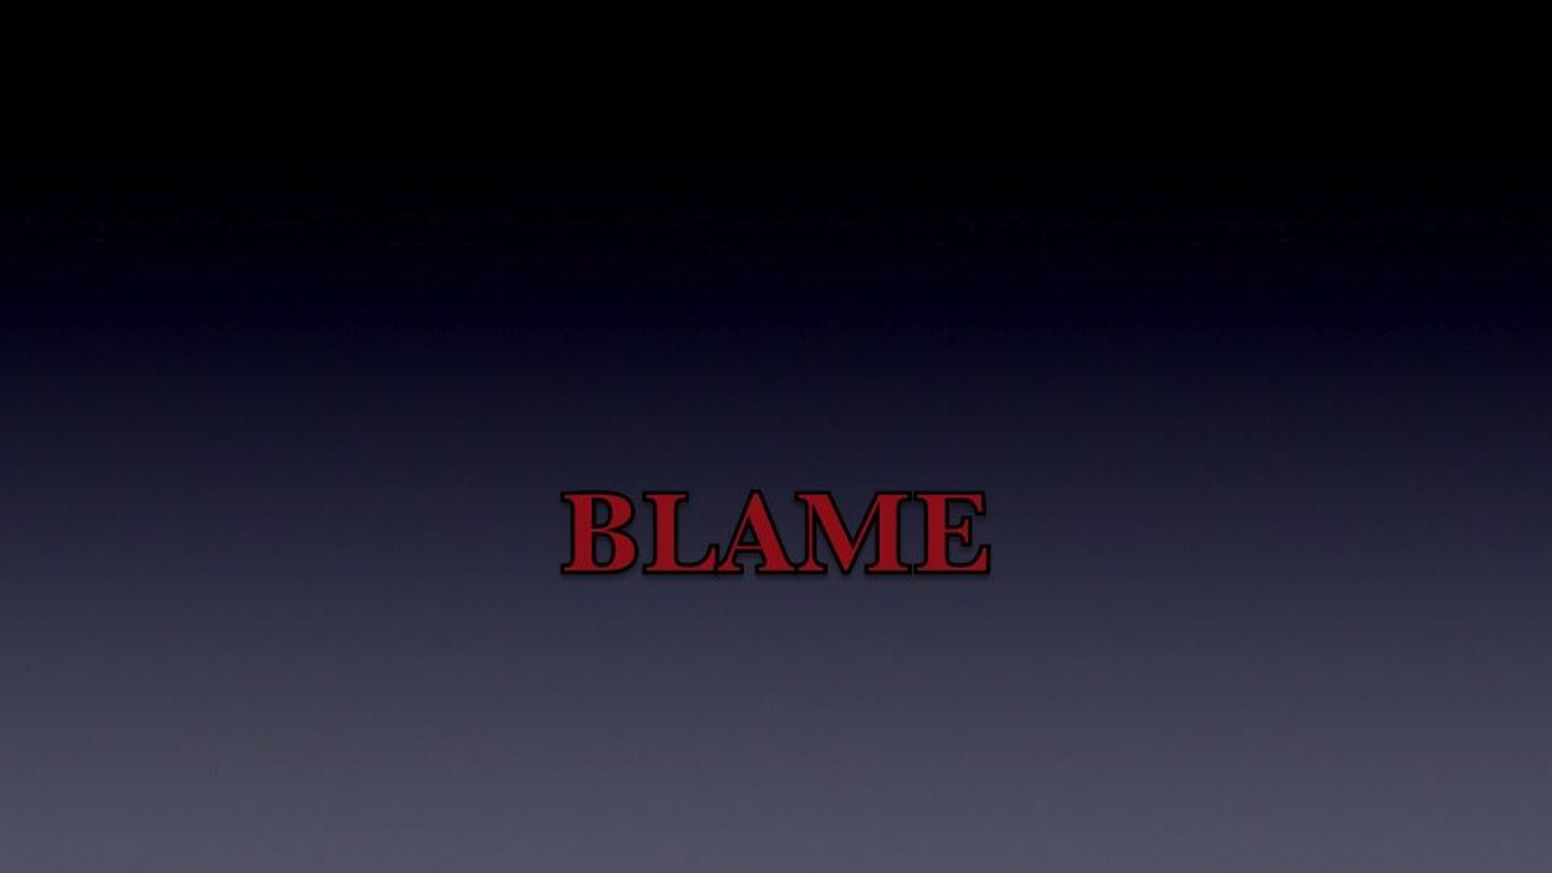 "BLAME"